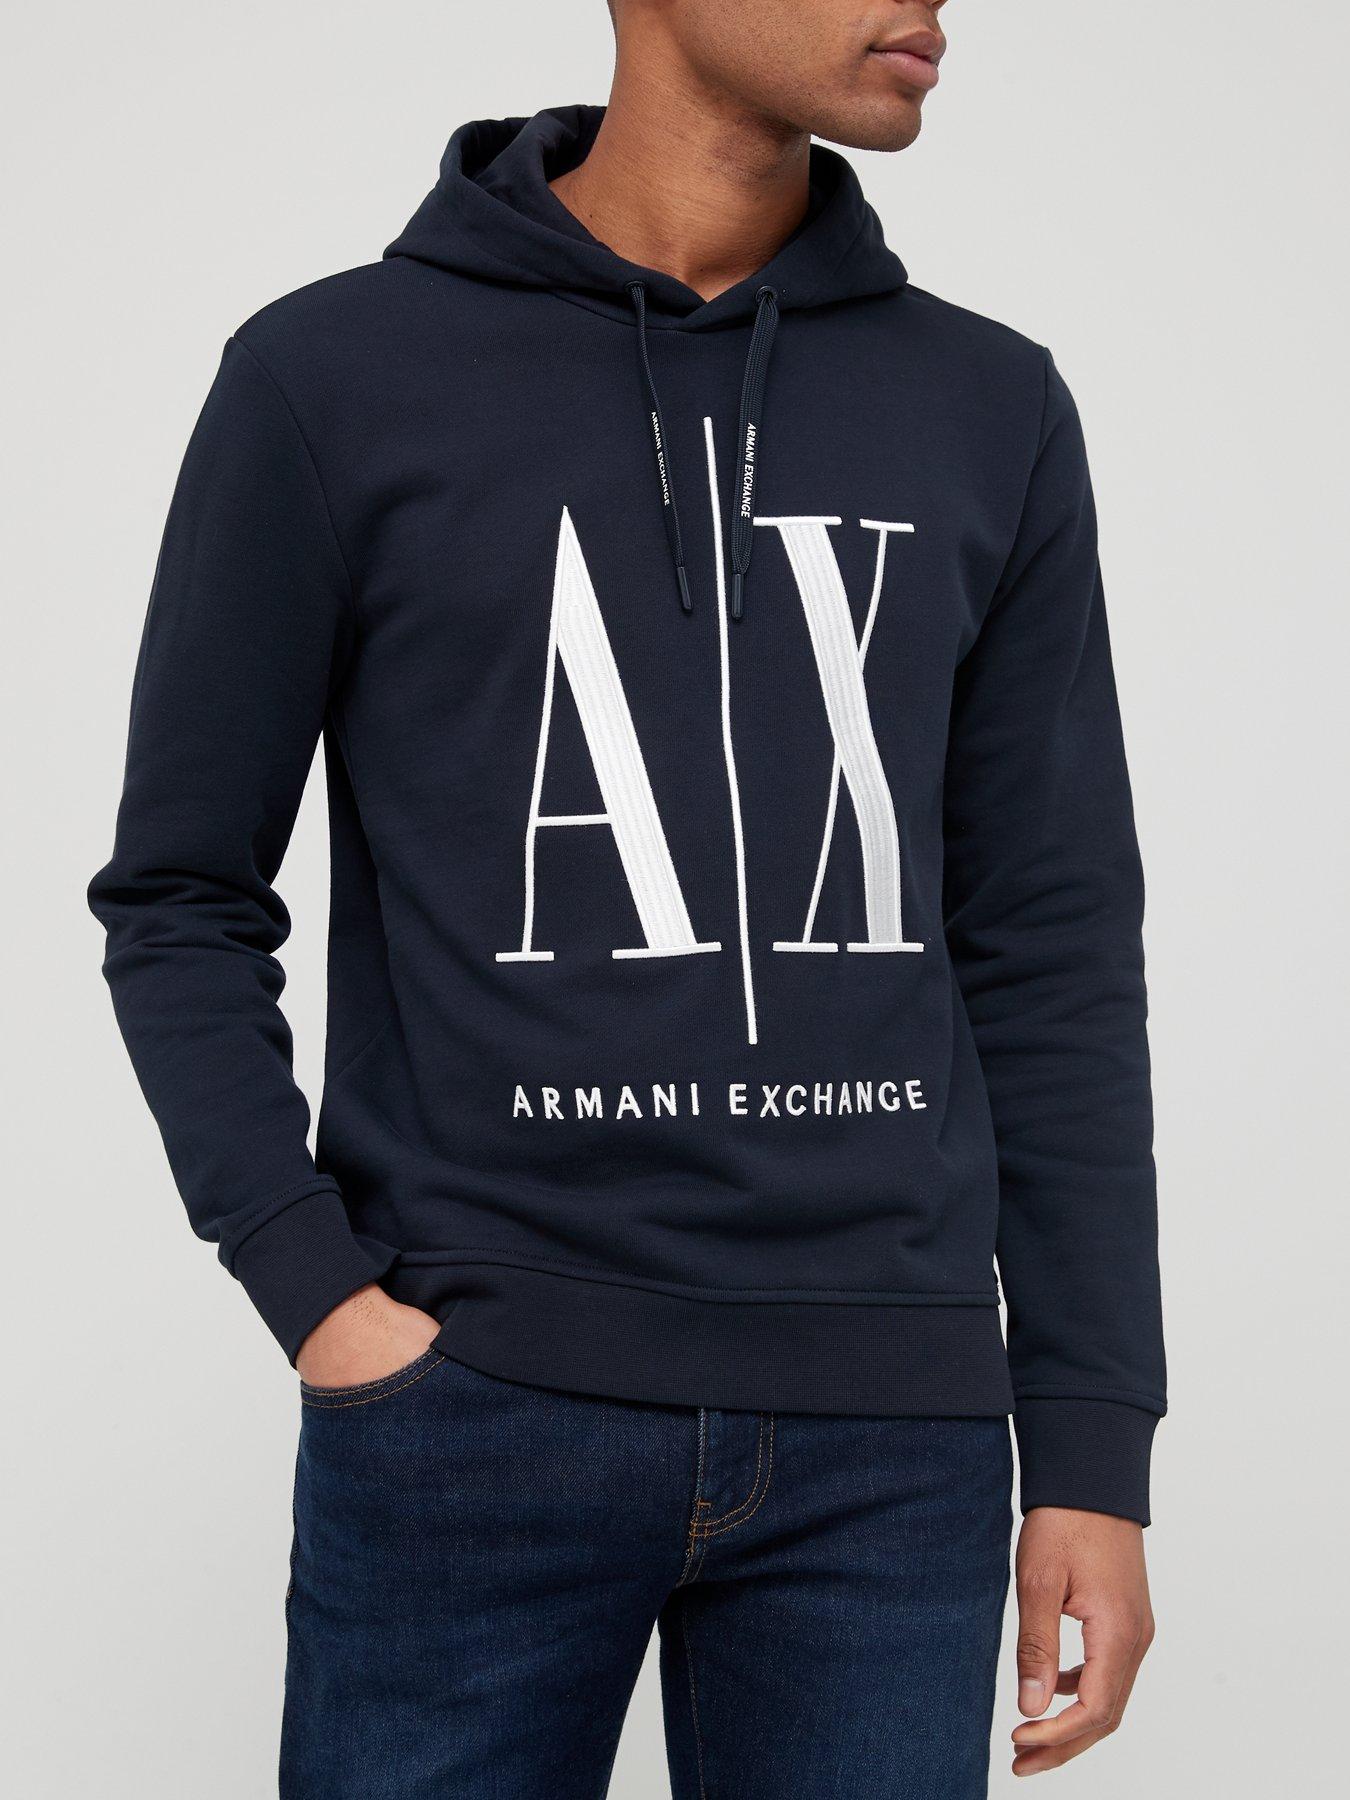 Blue | Armani exchange | Hoodies & sweatshirts | Men | Very Ireland